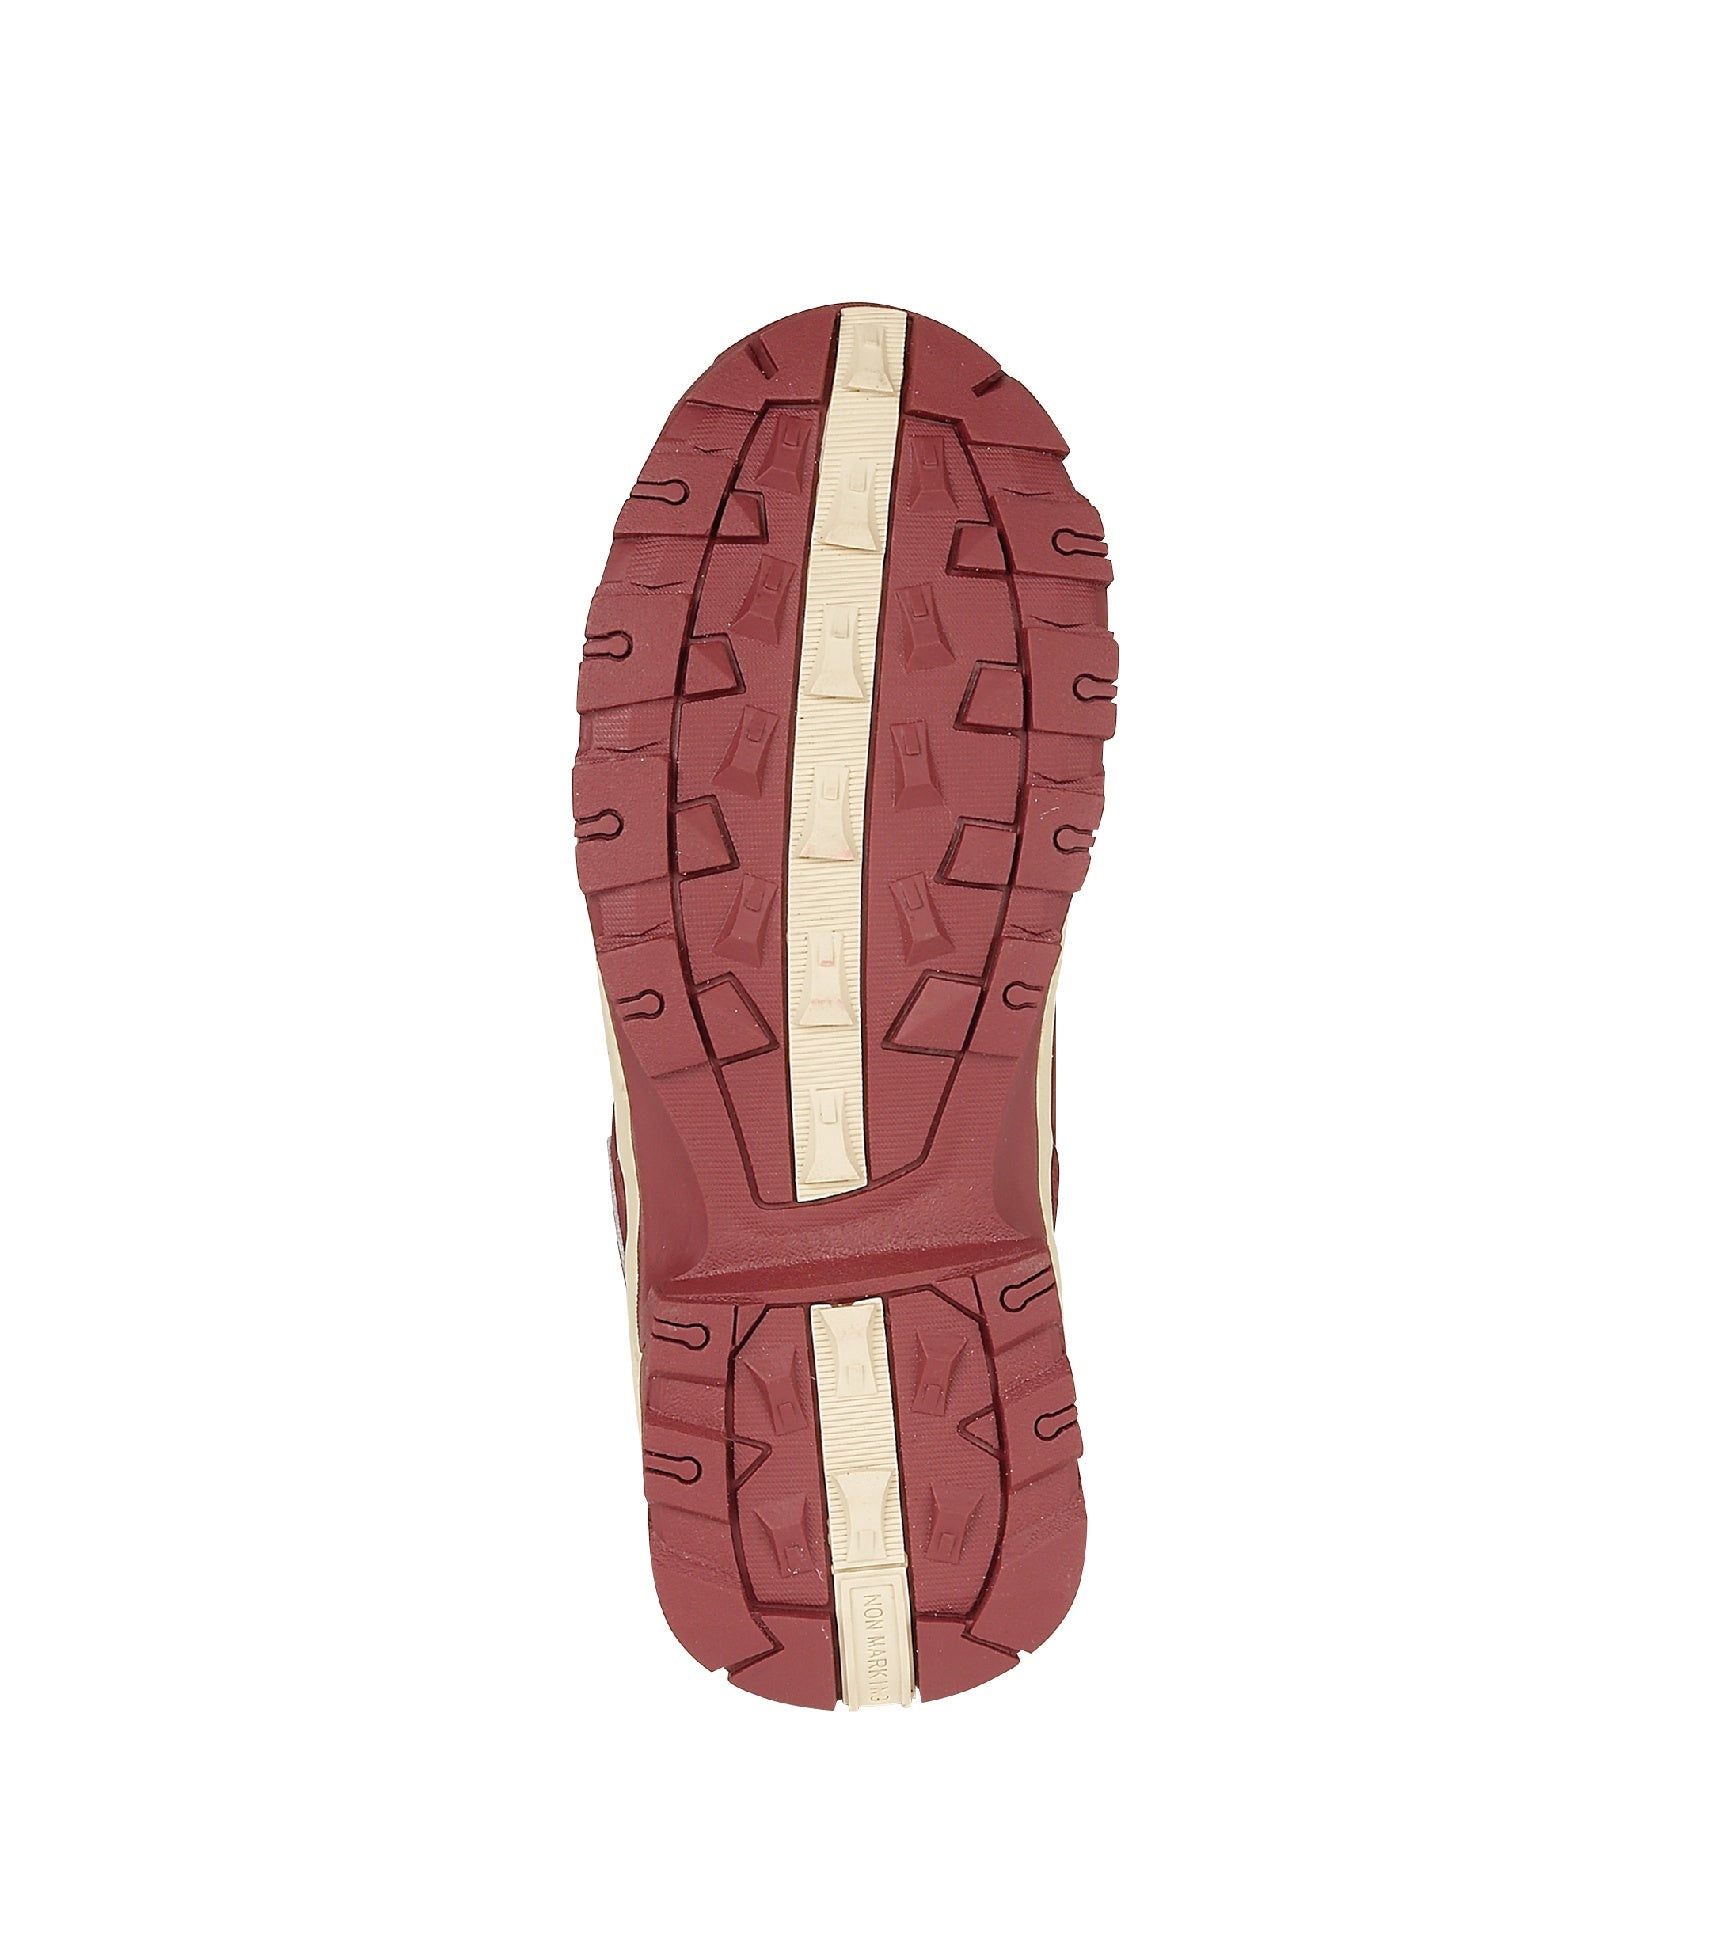 Women's Nubuck Leather Waterproof Walking Boots - #colour_burgundy